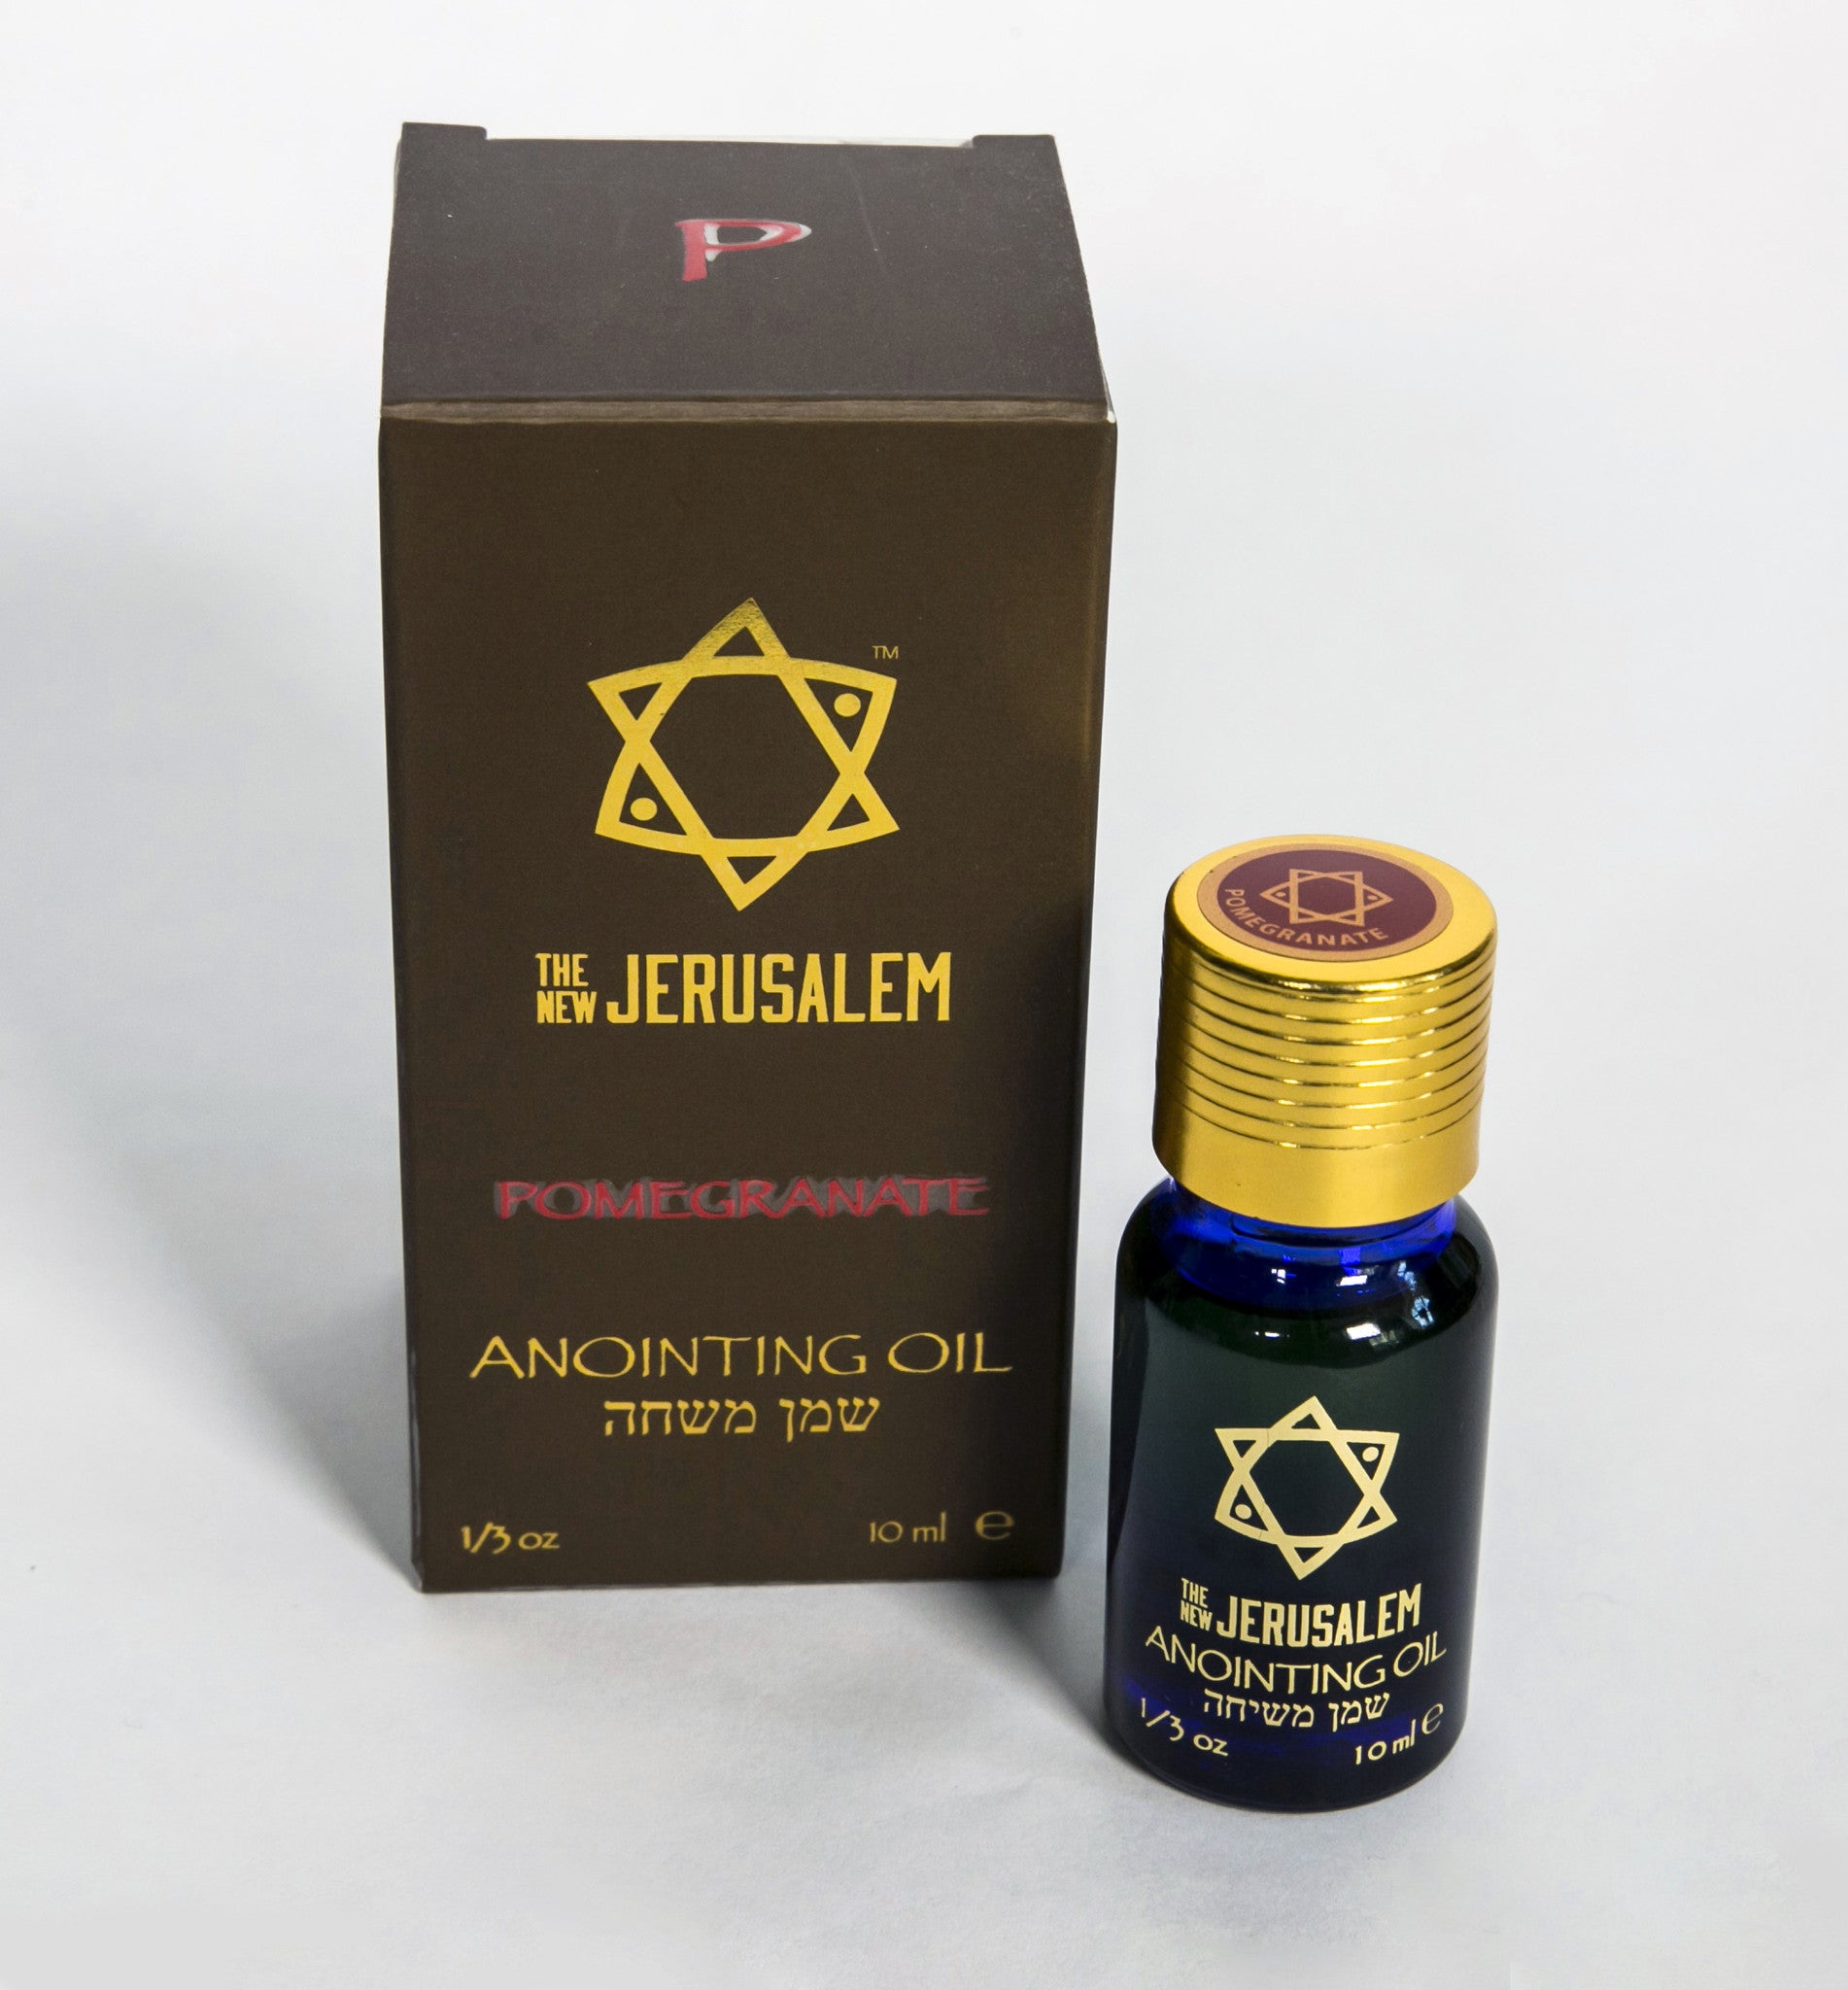 Frankincense & Myrrh Anointing Oil from Israel - 10ml